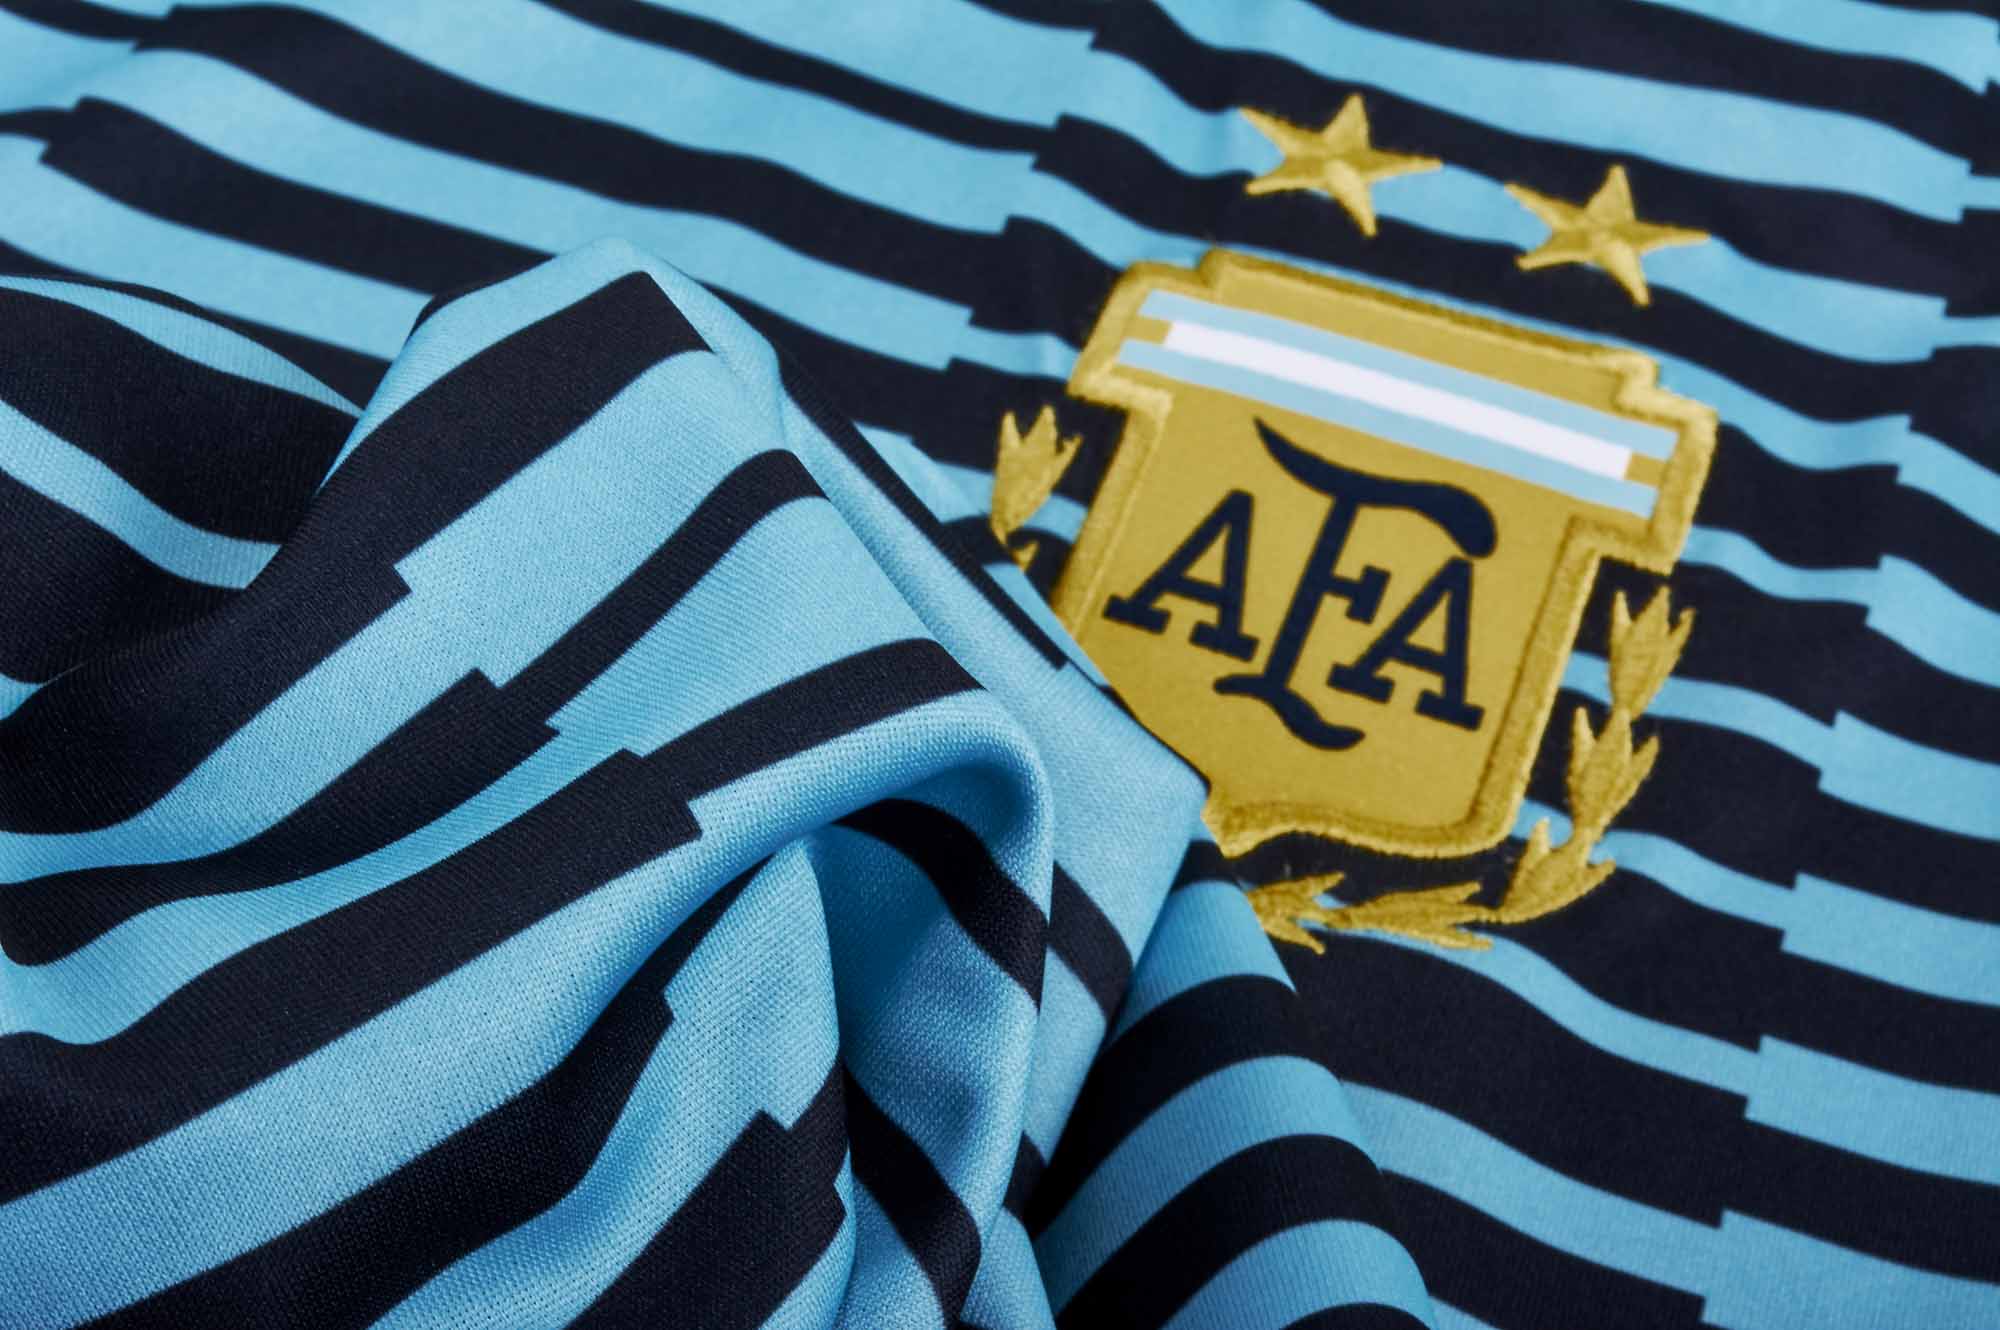 Argentina Pre-Match Jersey